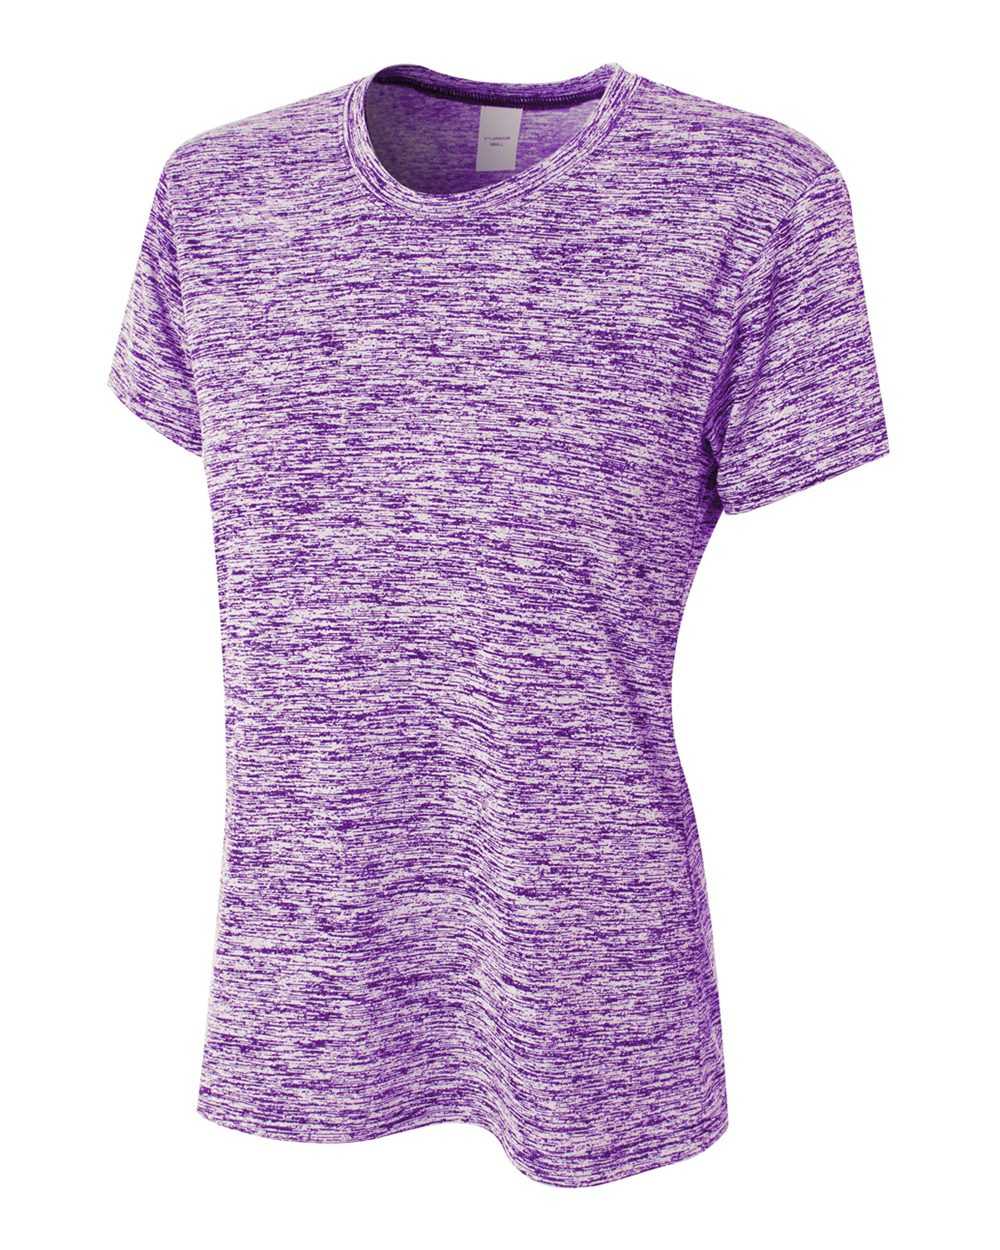 A4 NW3296 Women's Space Dye Tech Shirt - Purple - HIT a Double